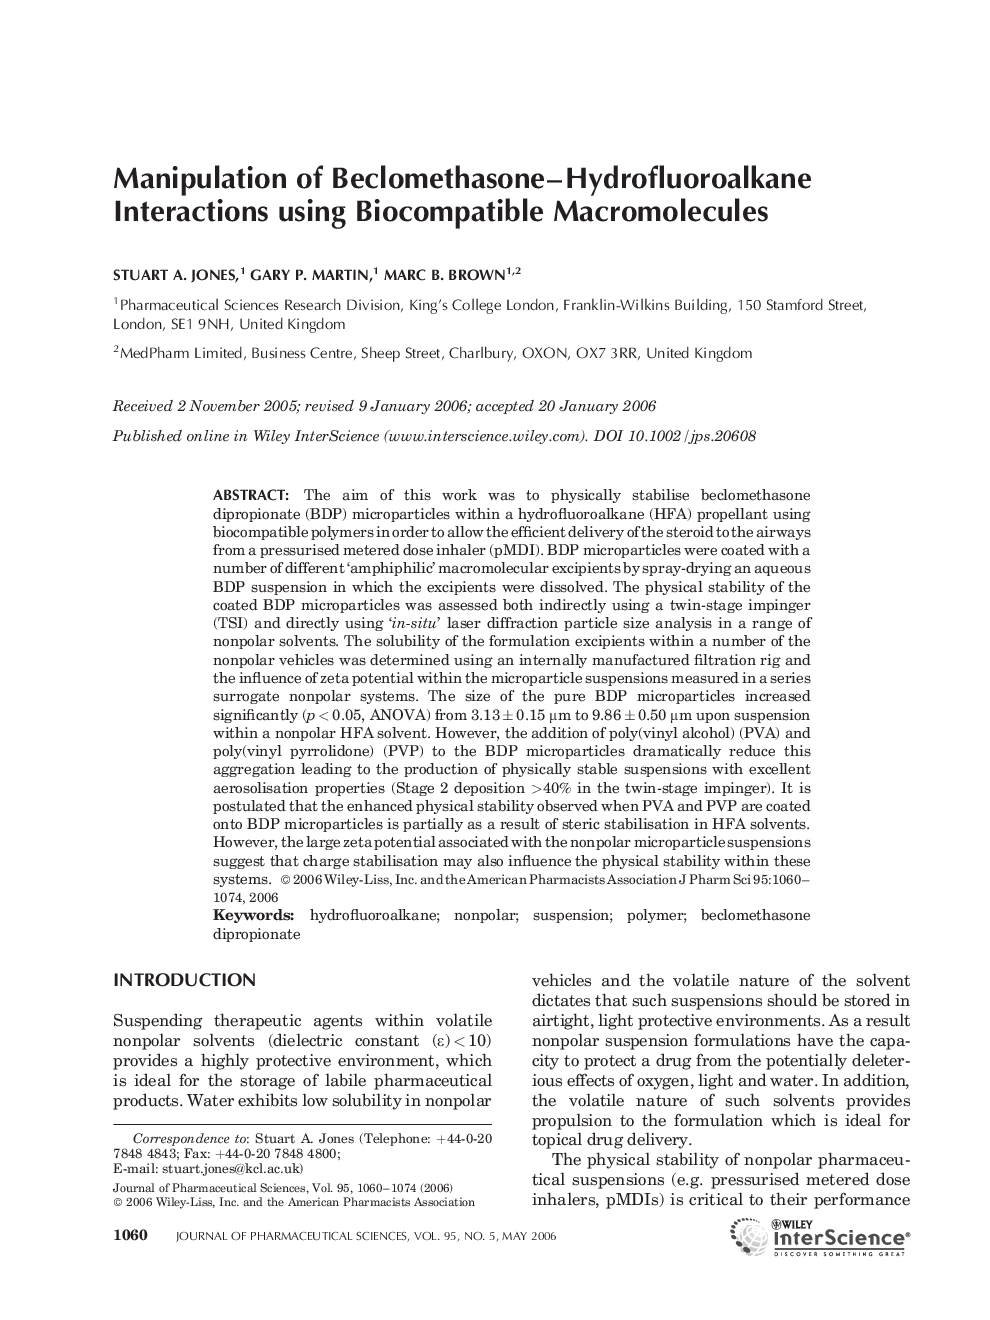 Manipulation of Beclomethasone-Hydrofluoroalkane Interactions using Biocompatible Macromolecules